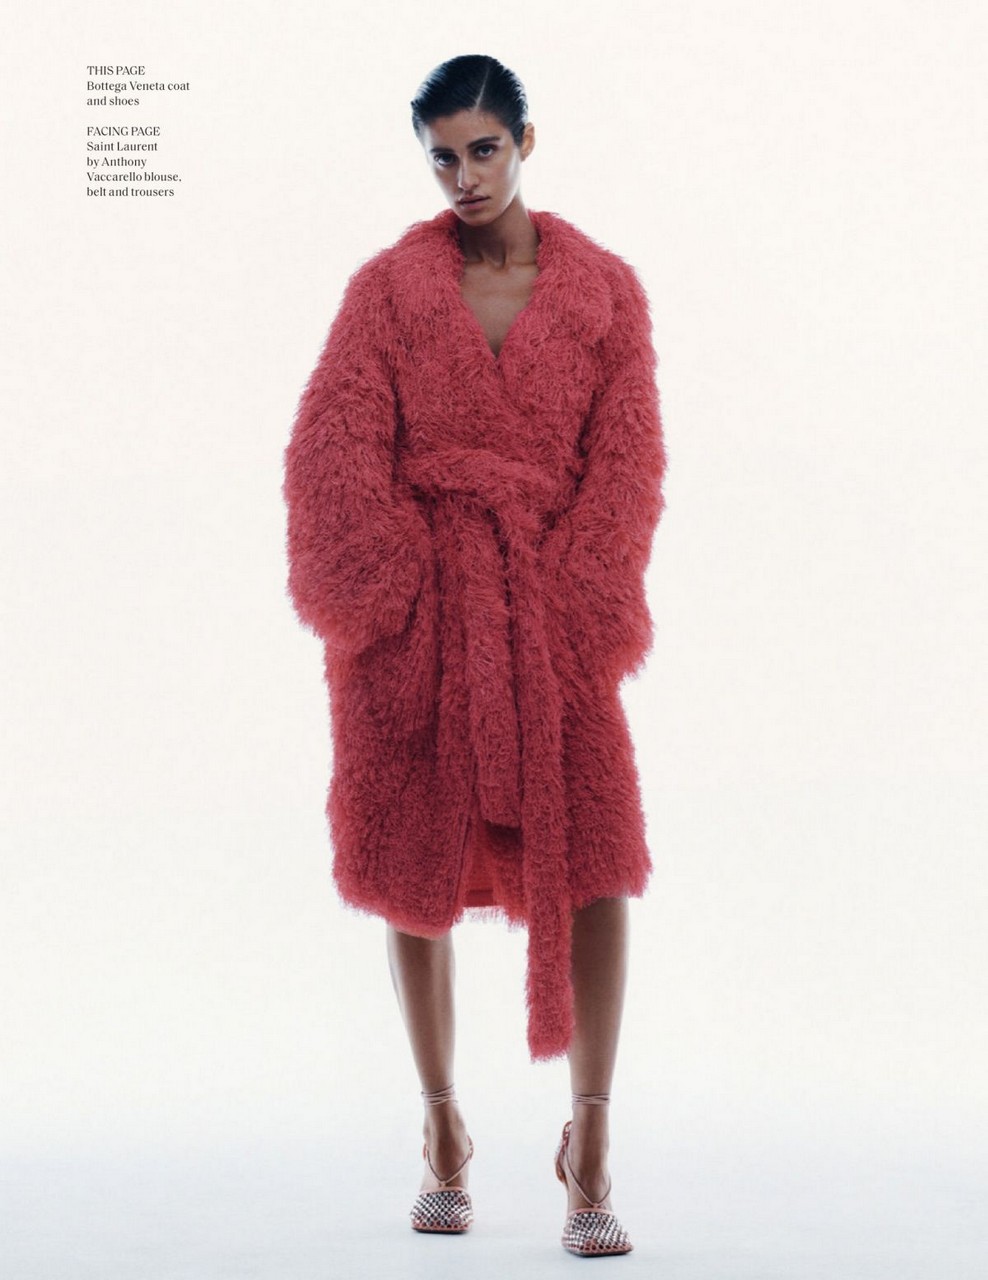 Anya Chalotra Vogue Magazine Singapore November December